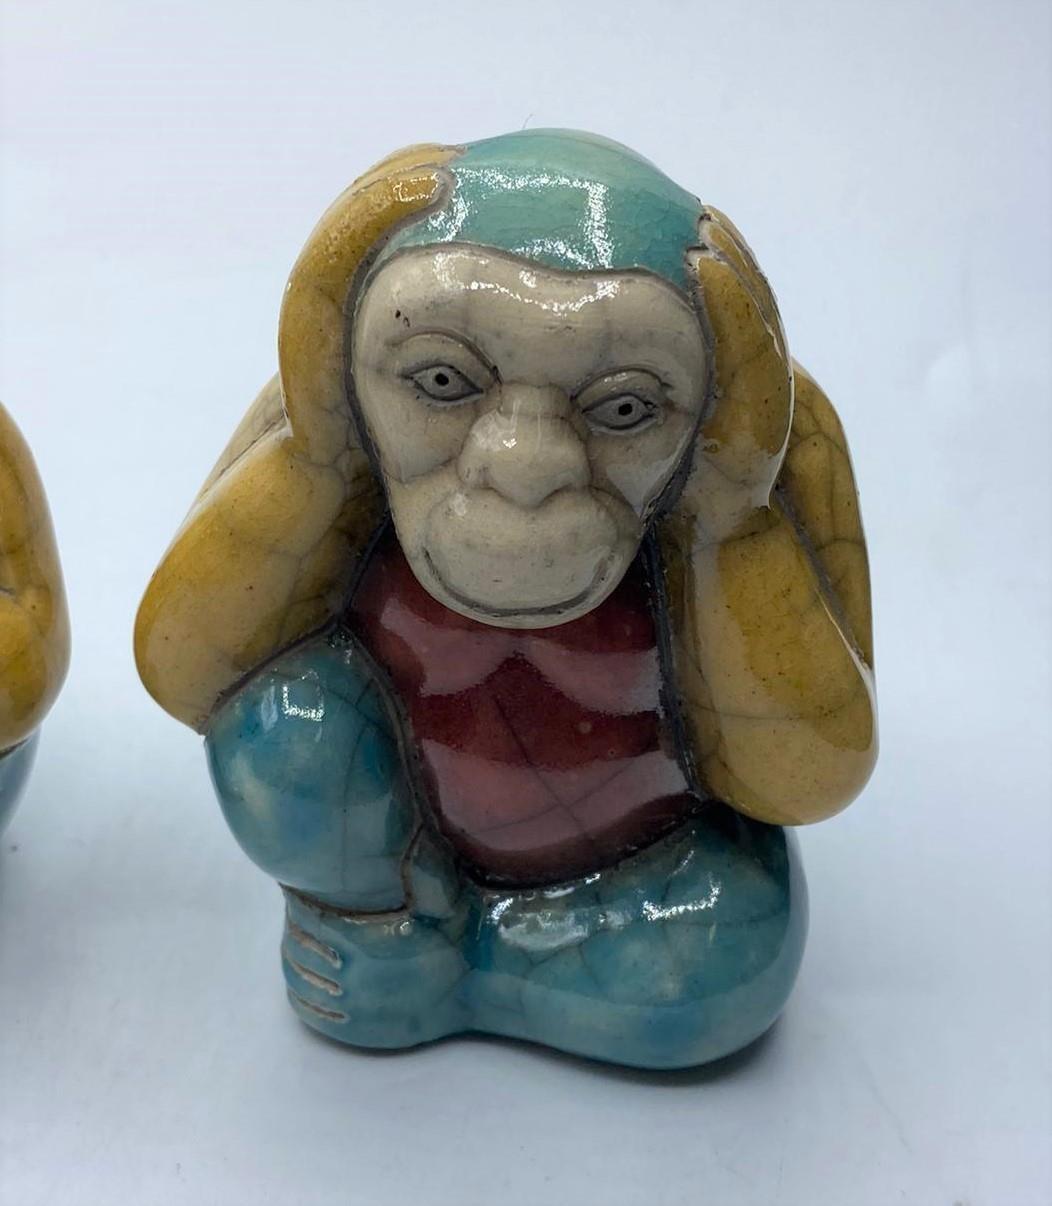 3x vintage ceramic monkeys, See no evil-Hear no evil-Speak no evil, 9cm tall - Image 3 of 5